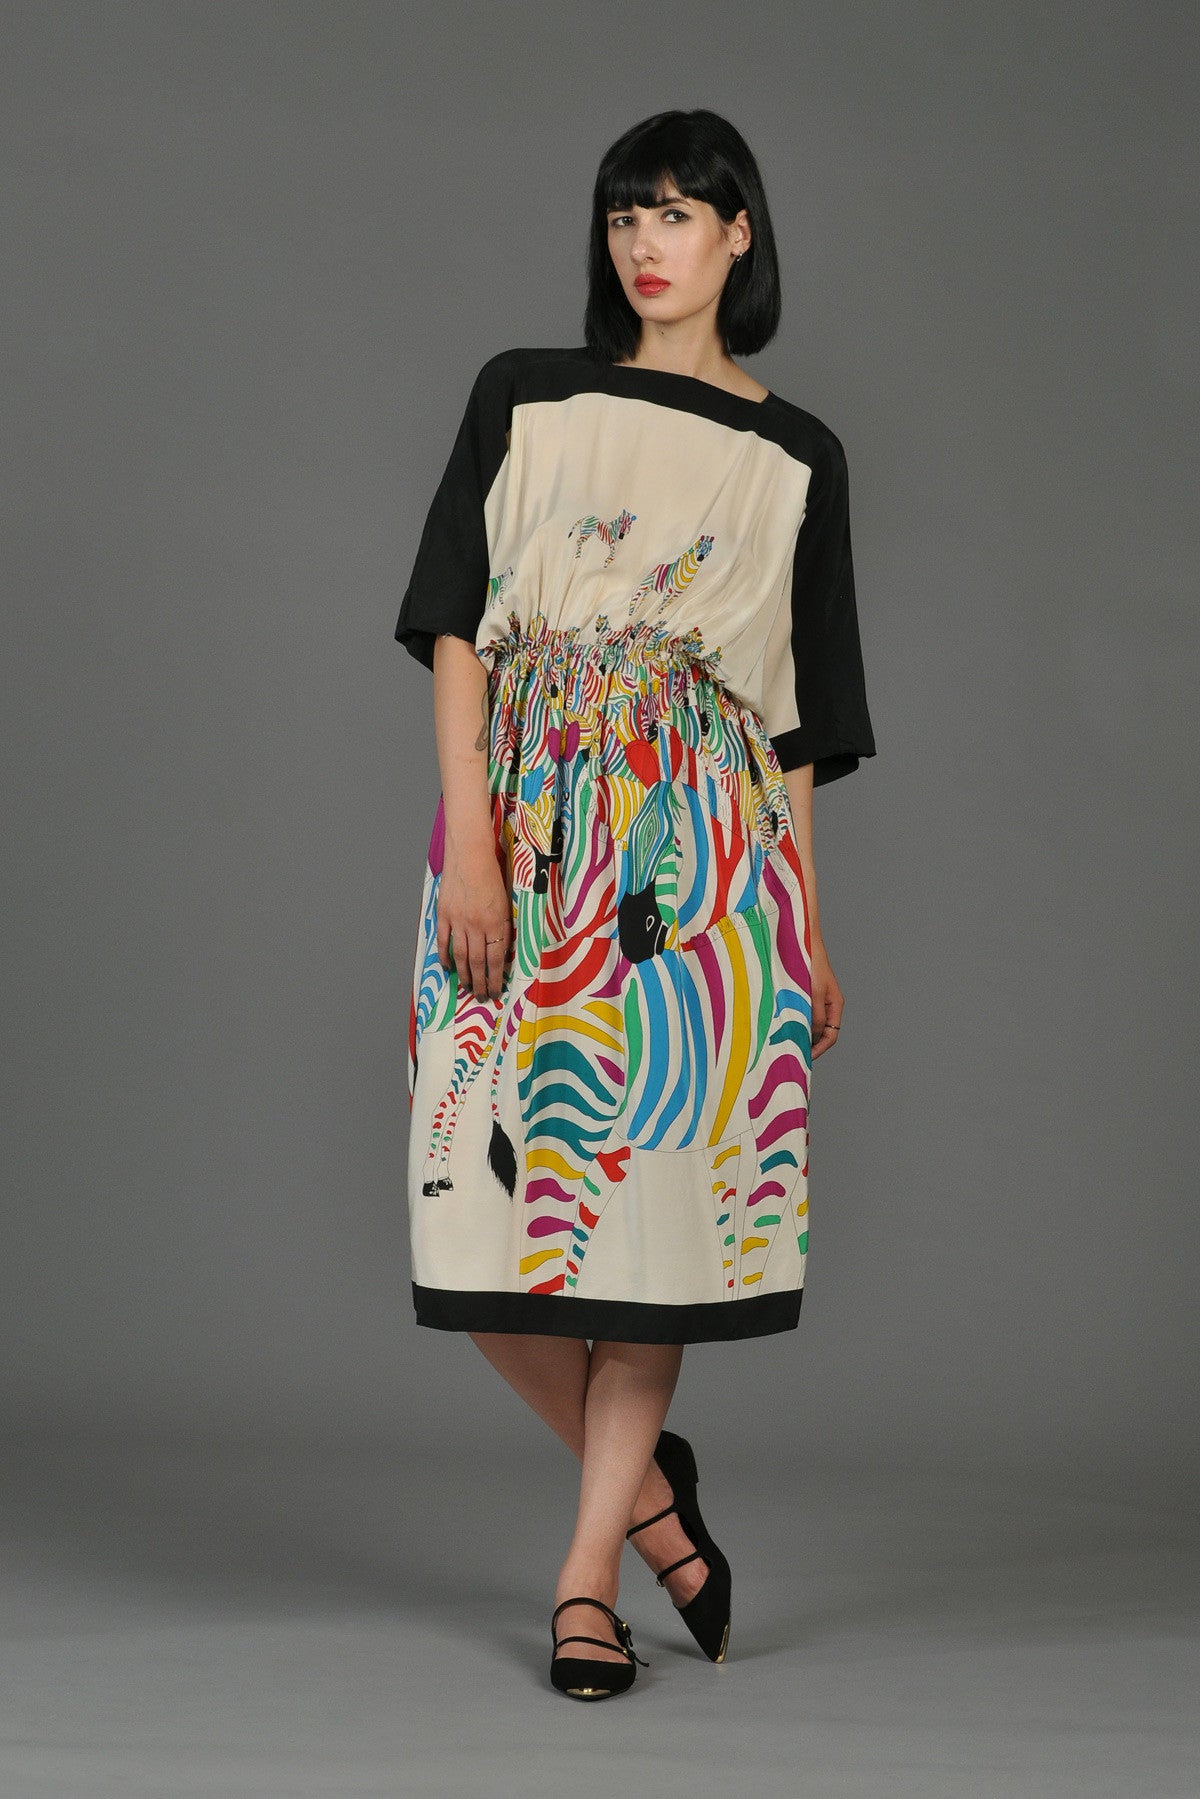 Black + White Silk Dress with Graphic Rainbow Zebras